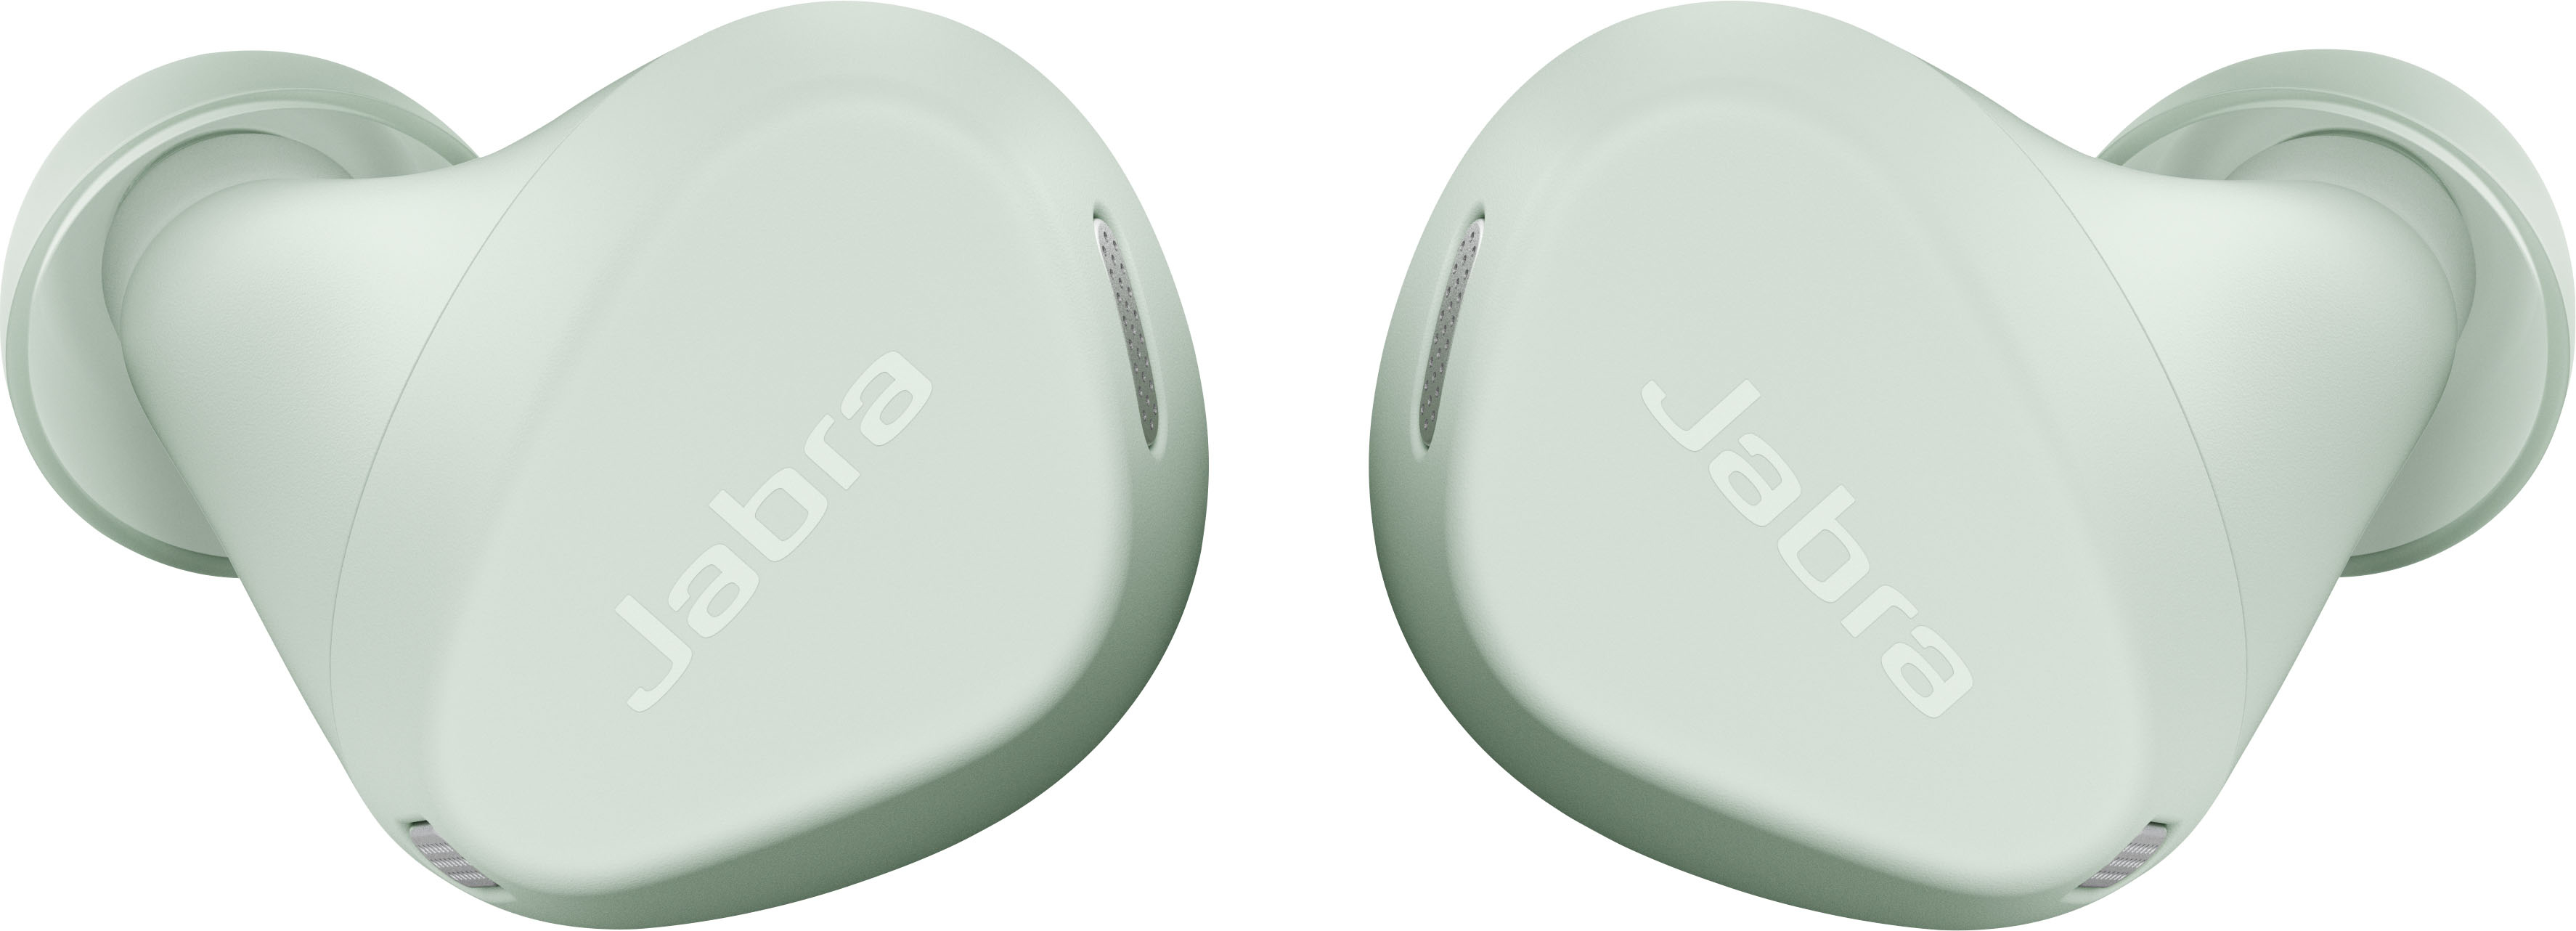 Jabra Elite 4 True Wireless Earbuds - 21340722